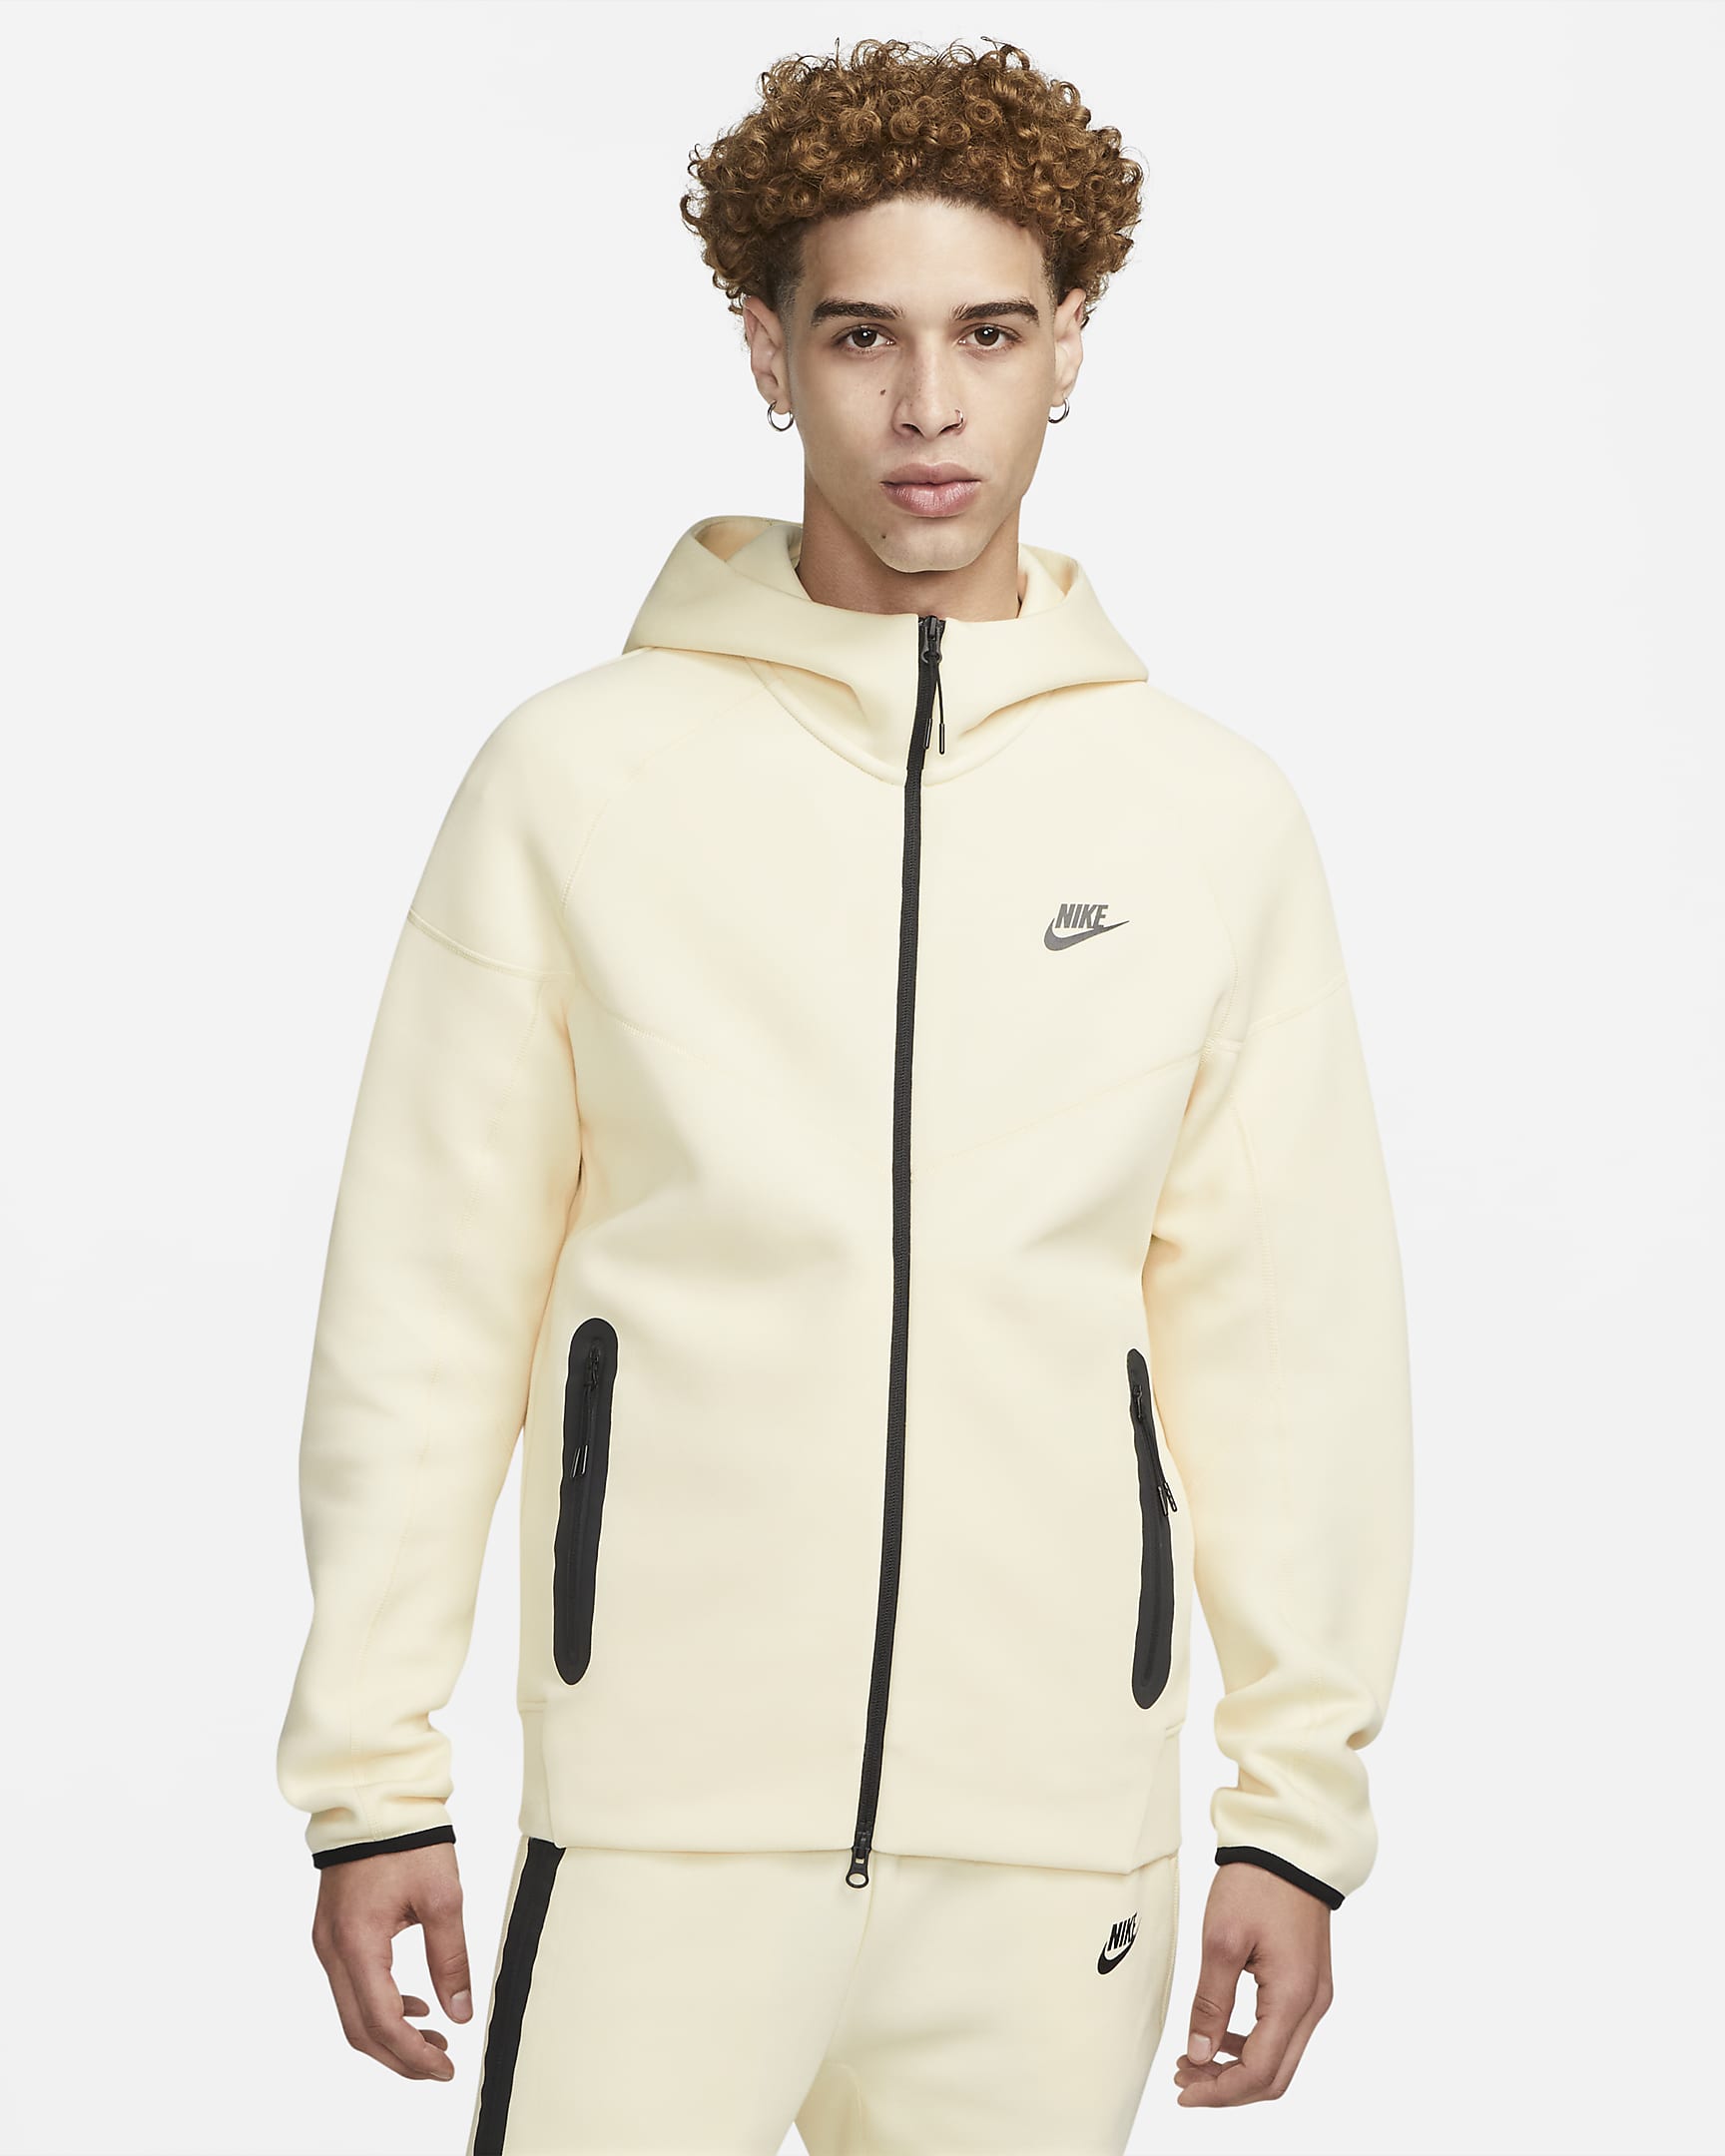 man wearing bright yellow-beige windrunner fleece jacket with Nike symbol